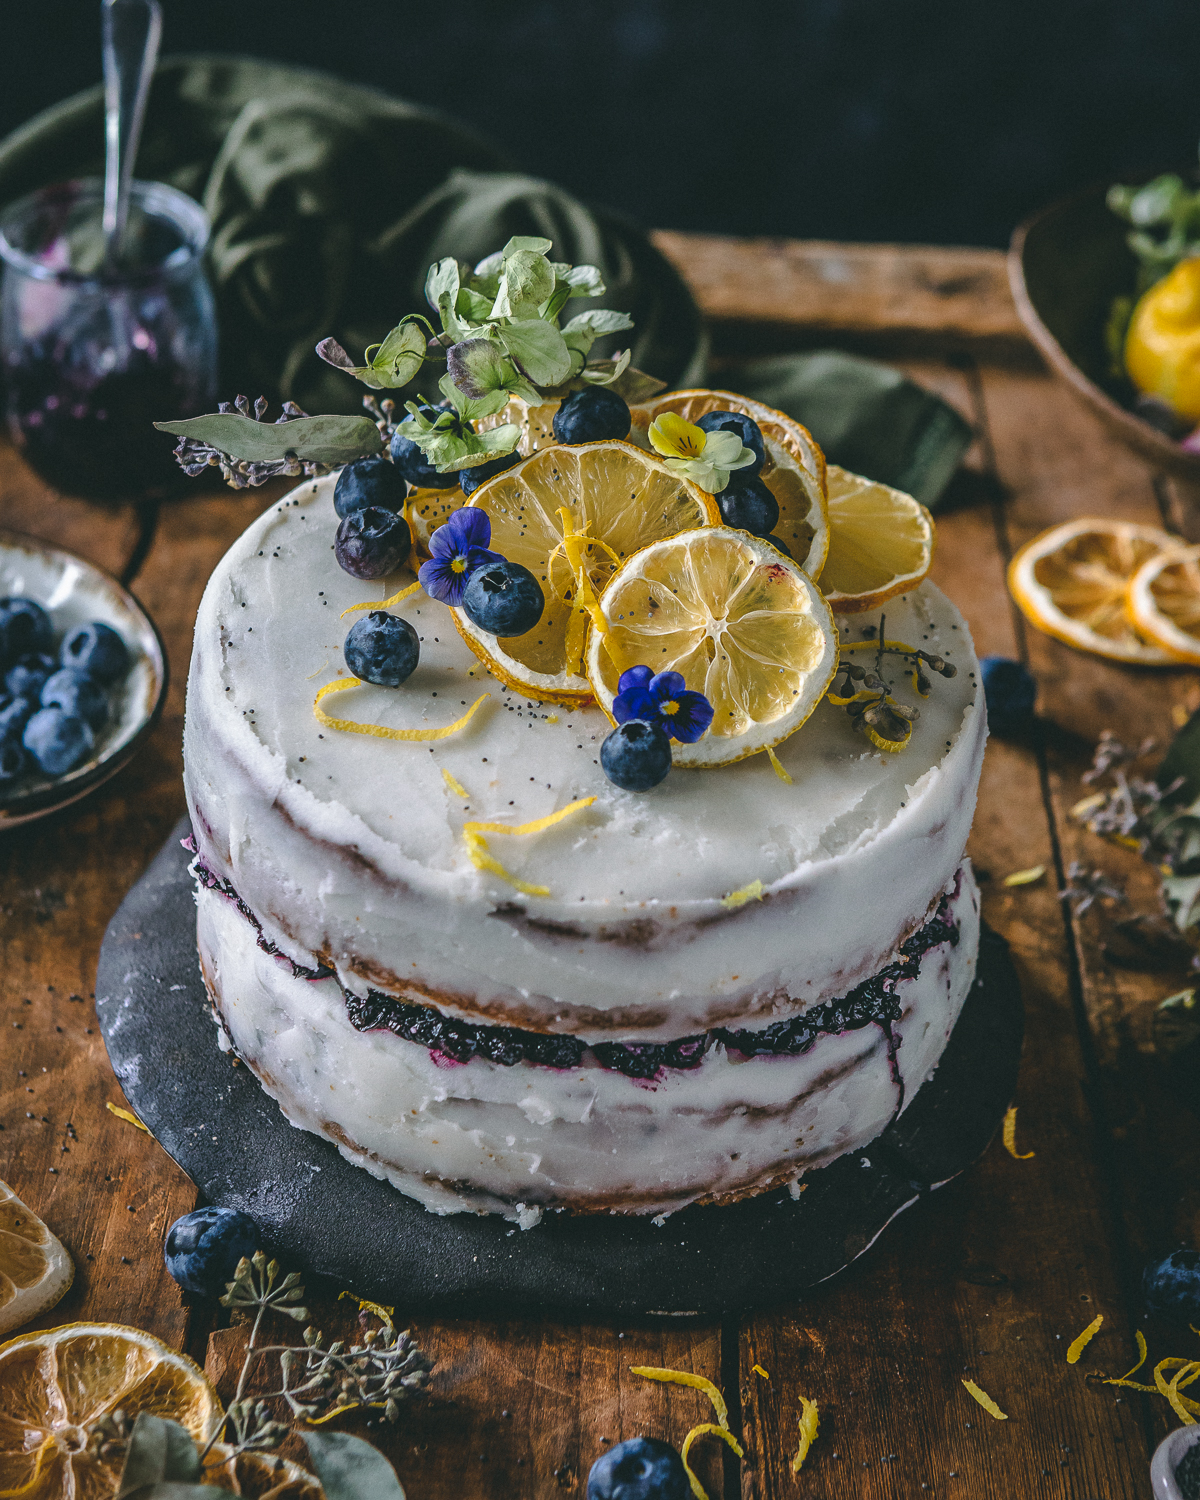 Lemon poppy seed cake with blueberries